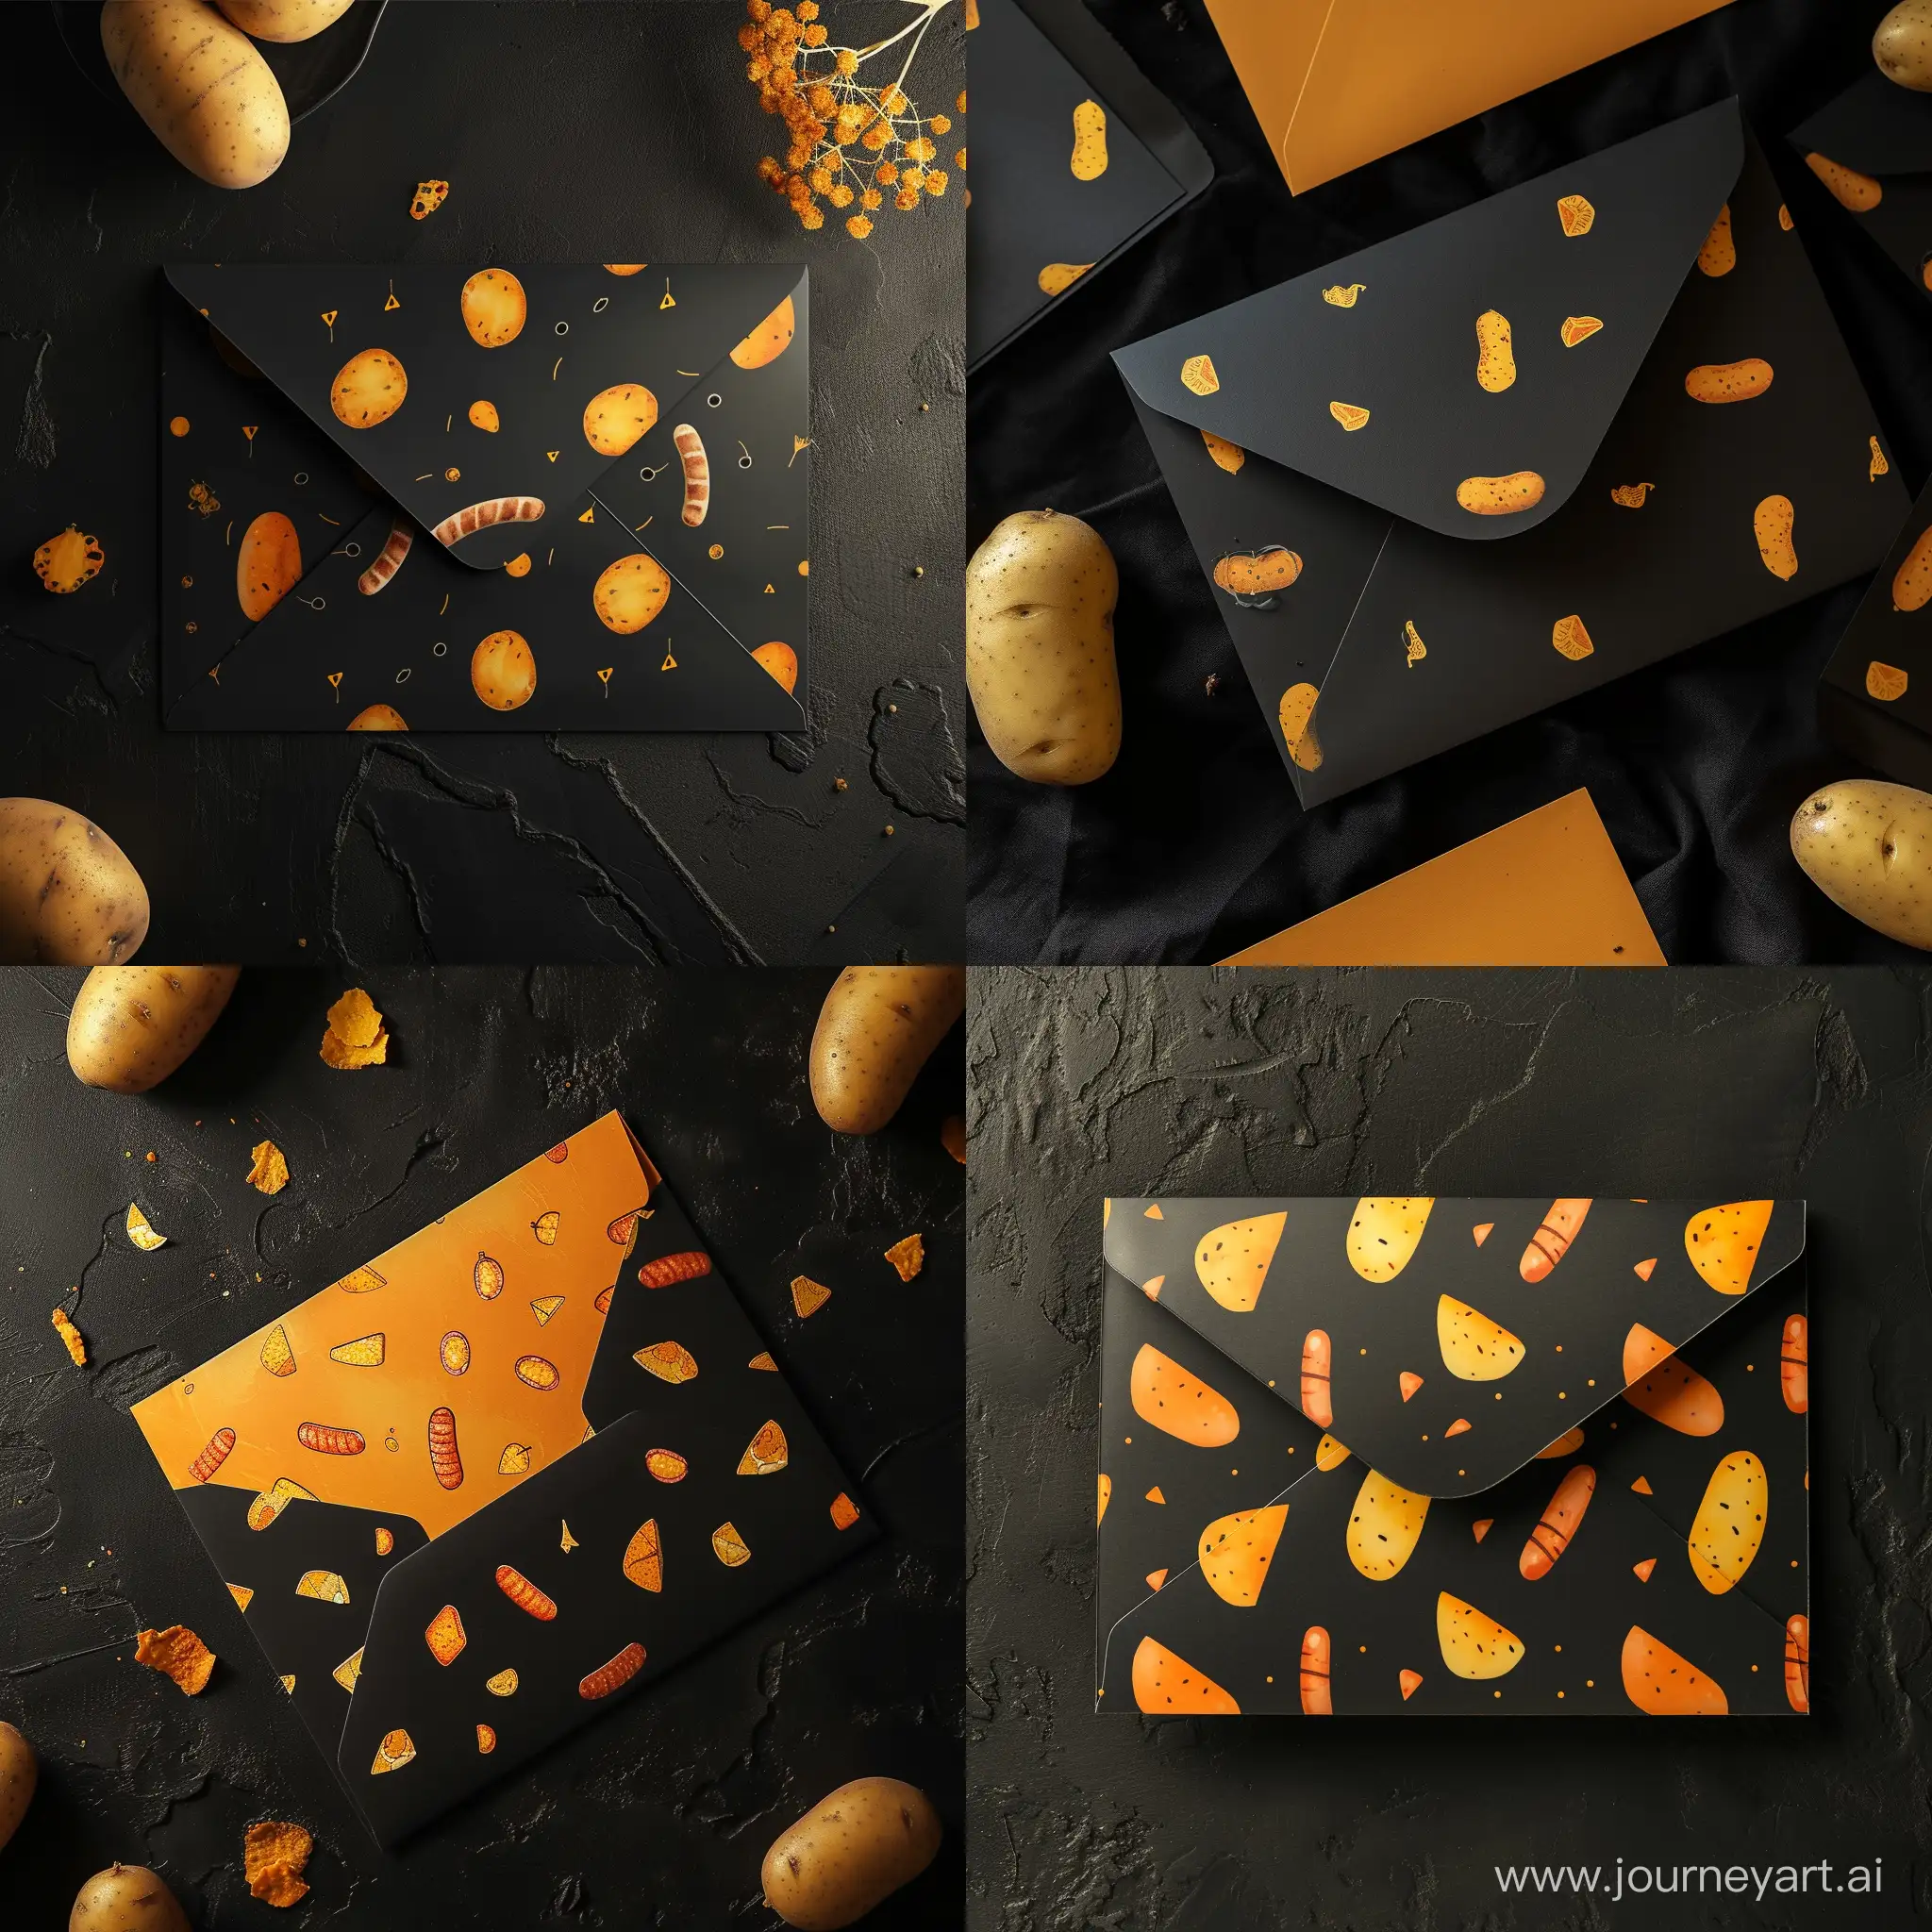 Artistic-Potato-Envelope-with-Sausage-and-Potato-Design-on-Elegant-Matte-Black-Background